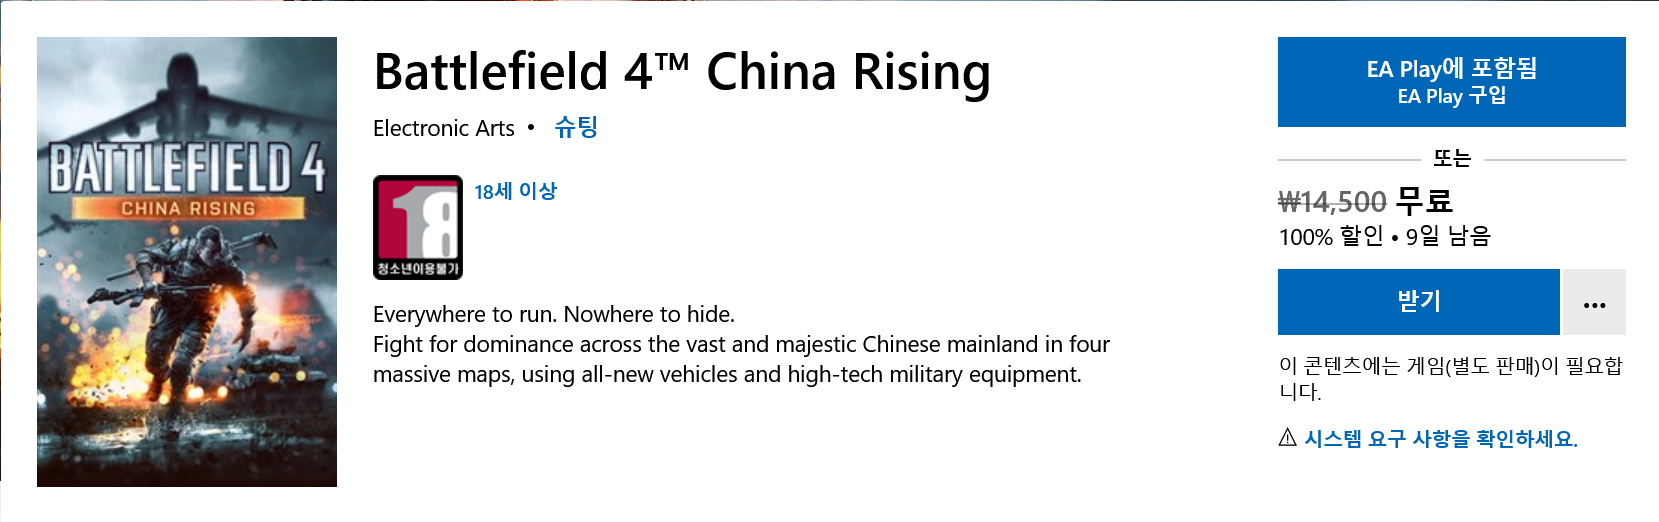 Screenshot_2021-06-02 Battlefield 4™ China Rising 구매 - Microsoft Store ko-KR.png